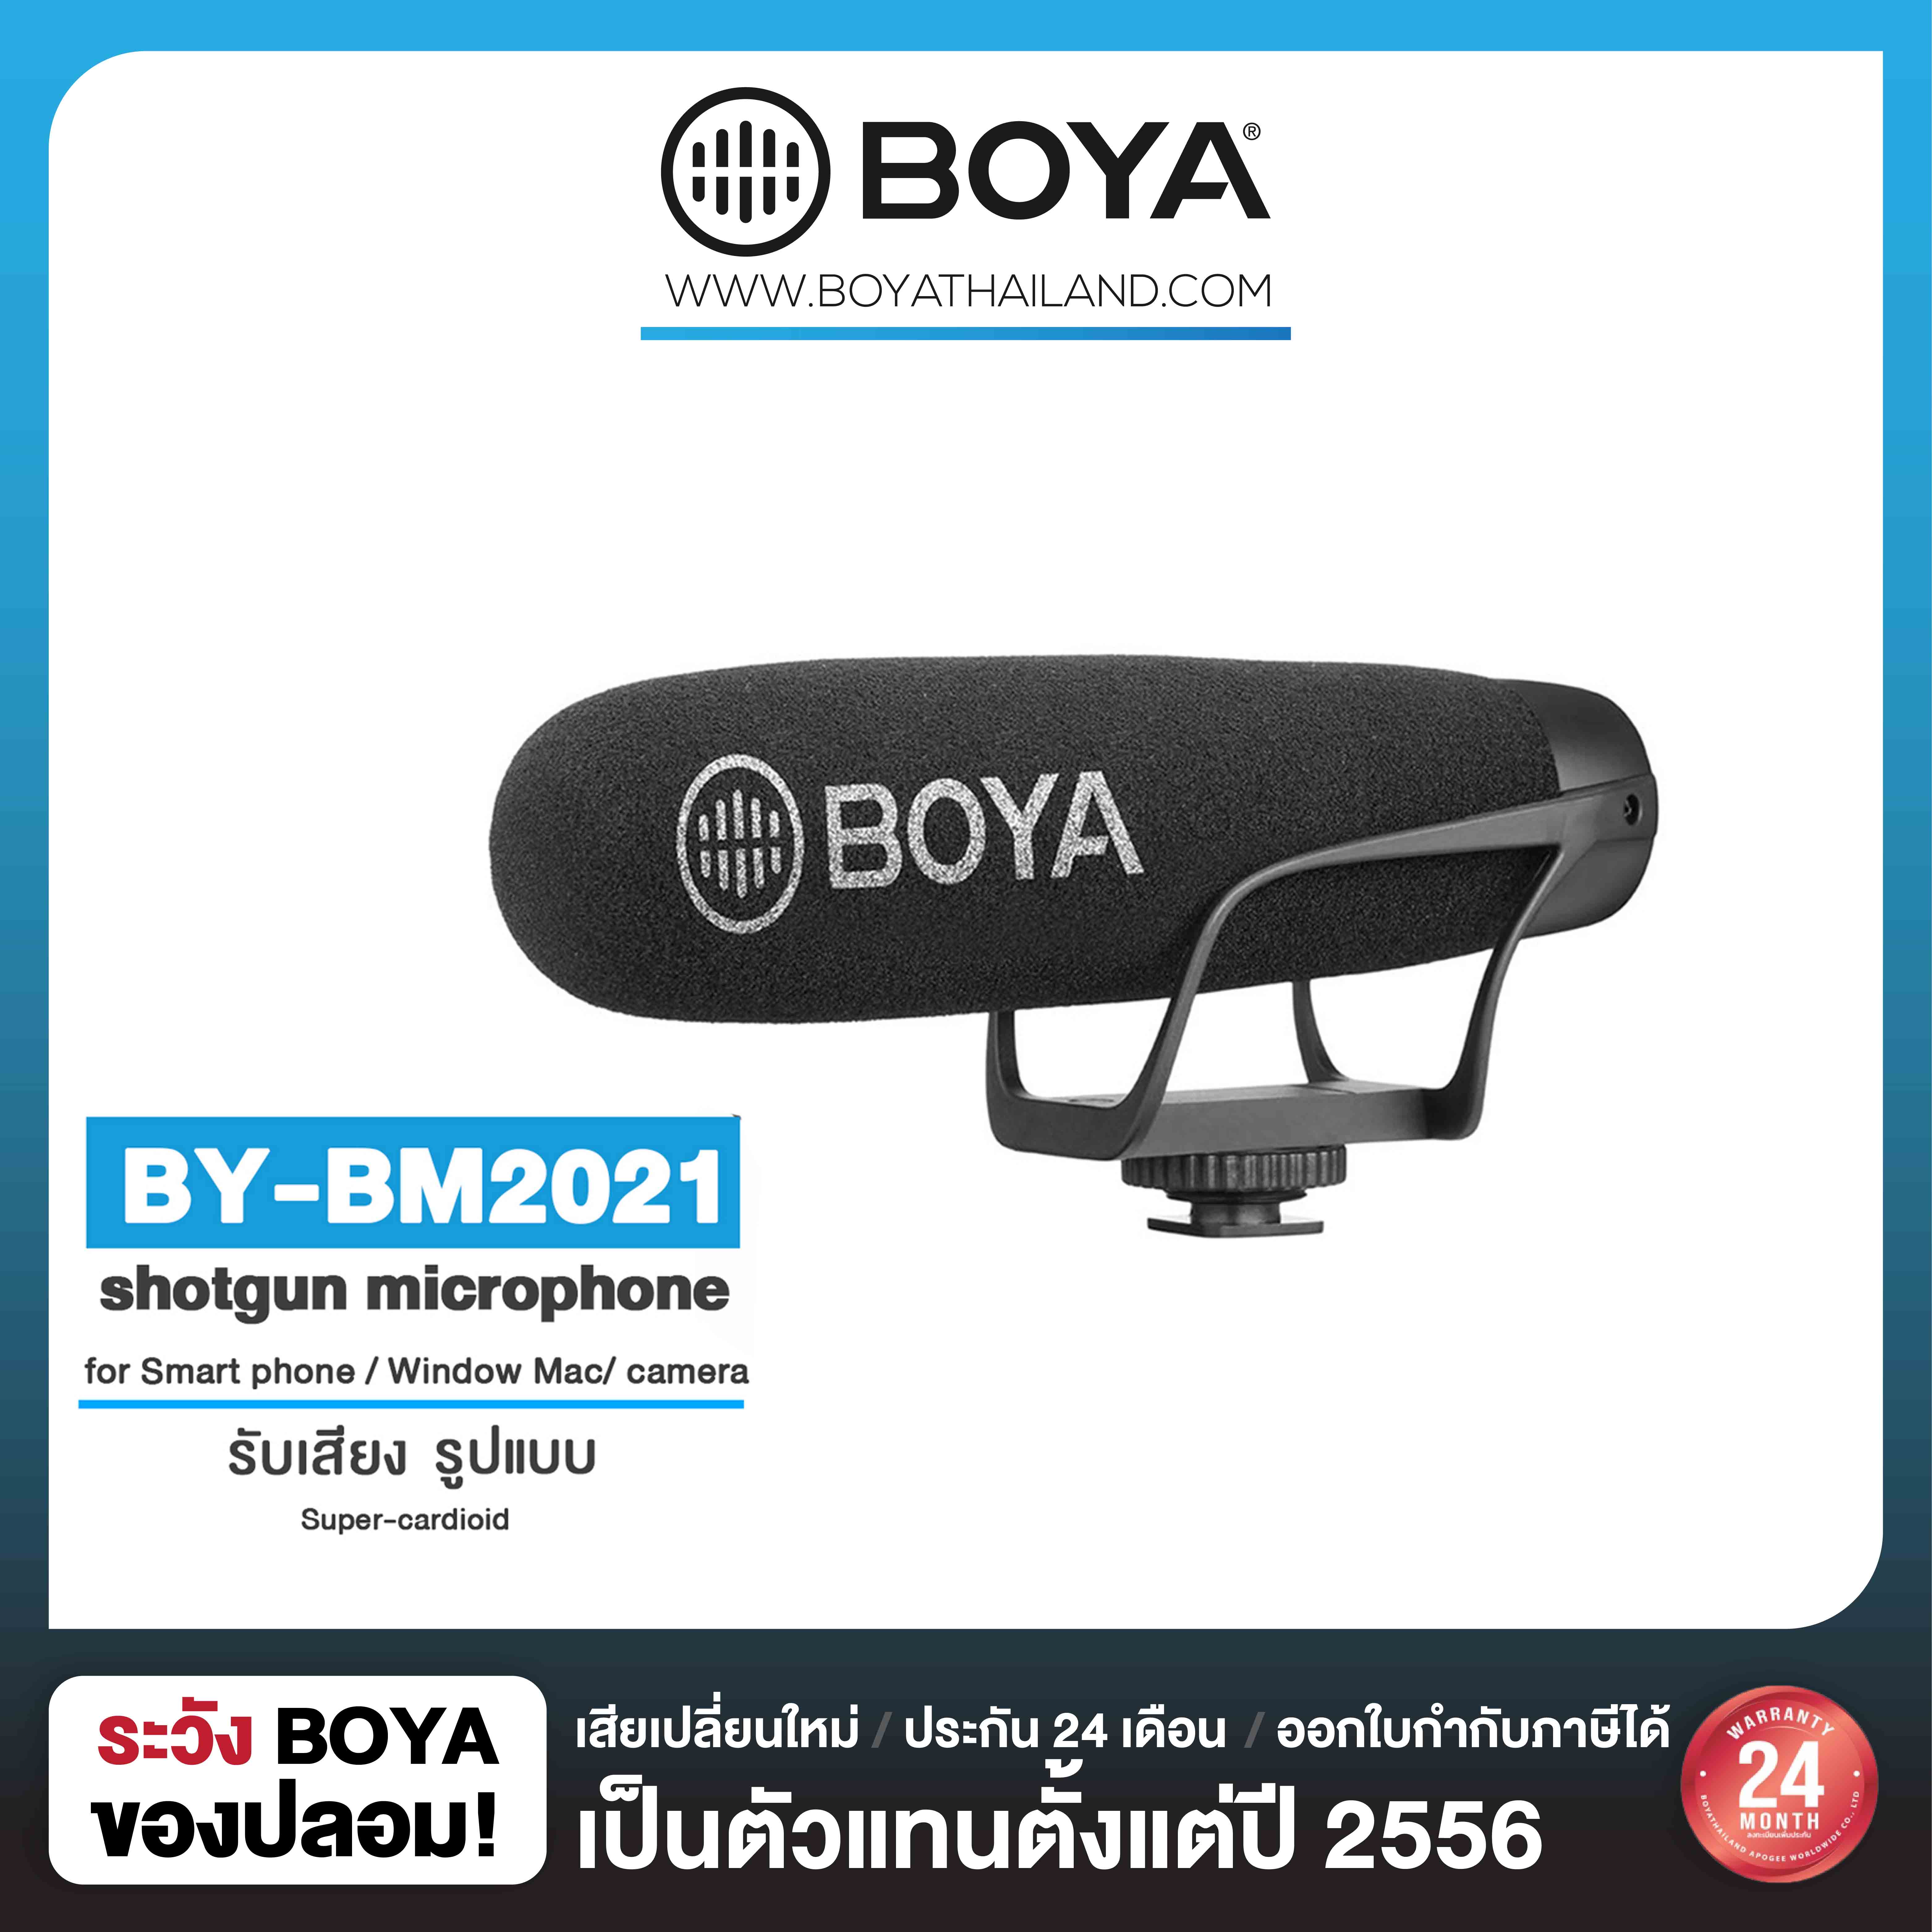 Boya BY-BM2021